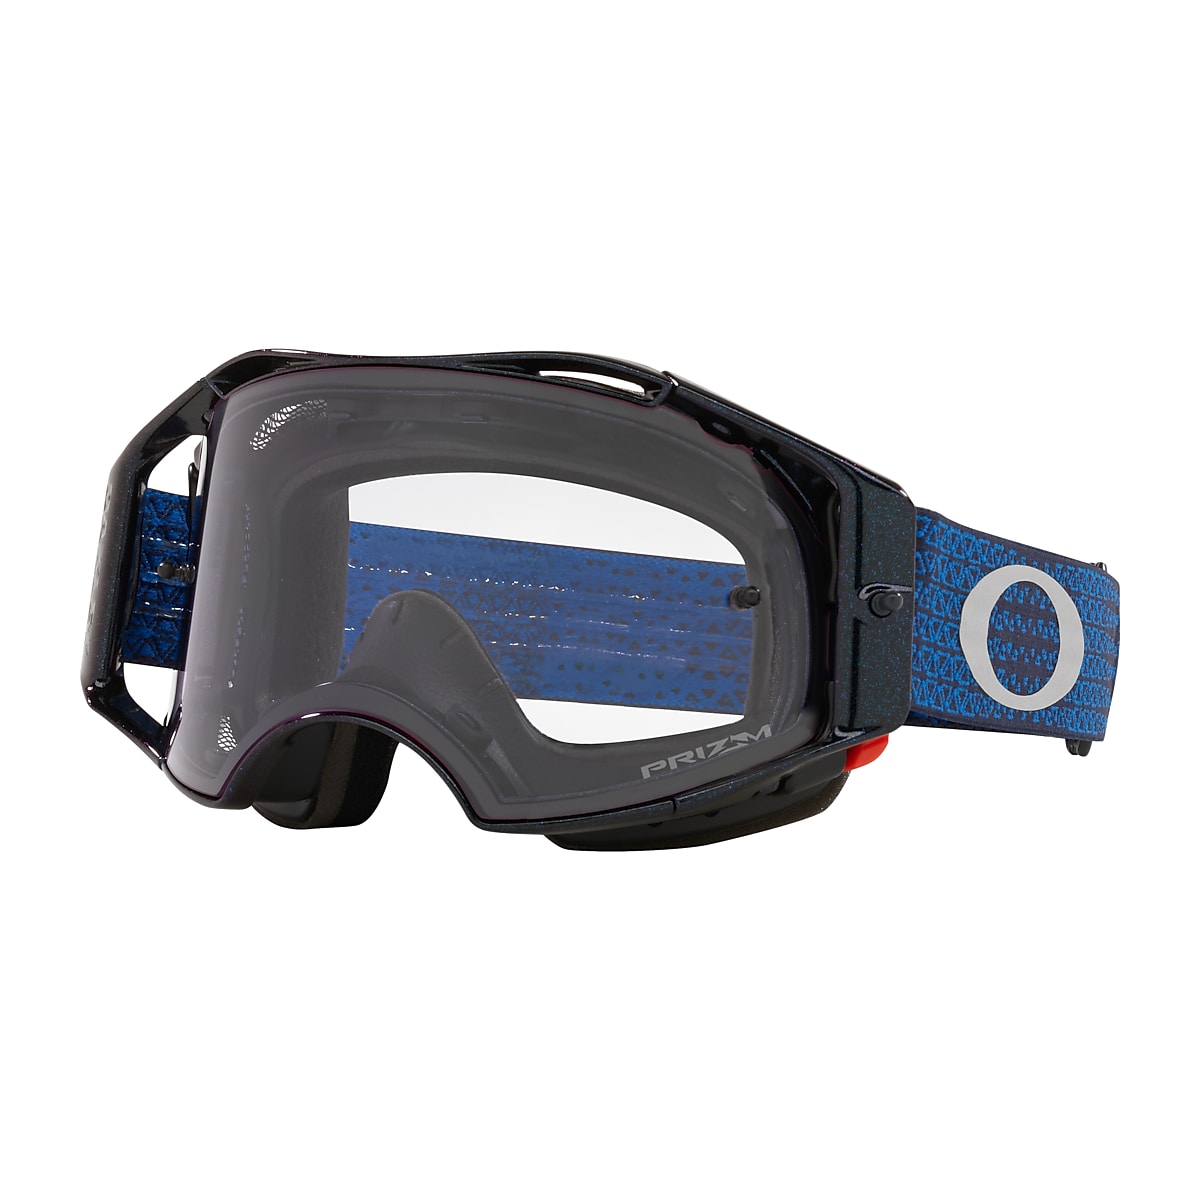 Oakley MTB Goggles - Navy Galaxy - Prizm MX Light - OO7107-12 |